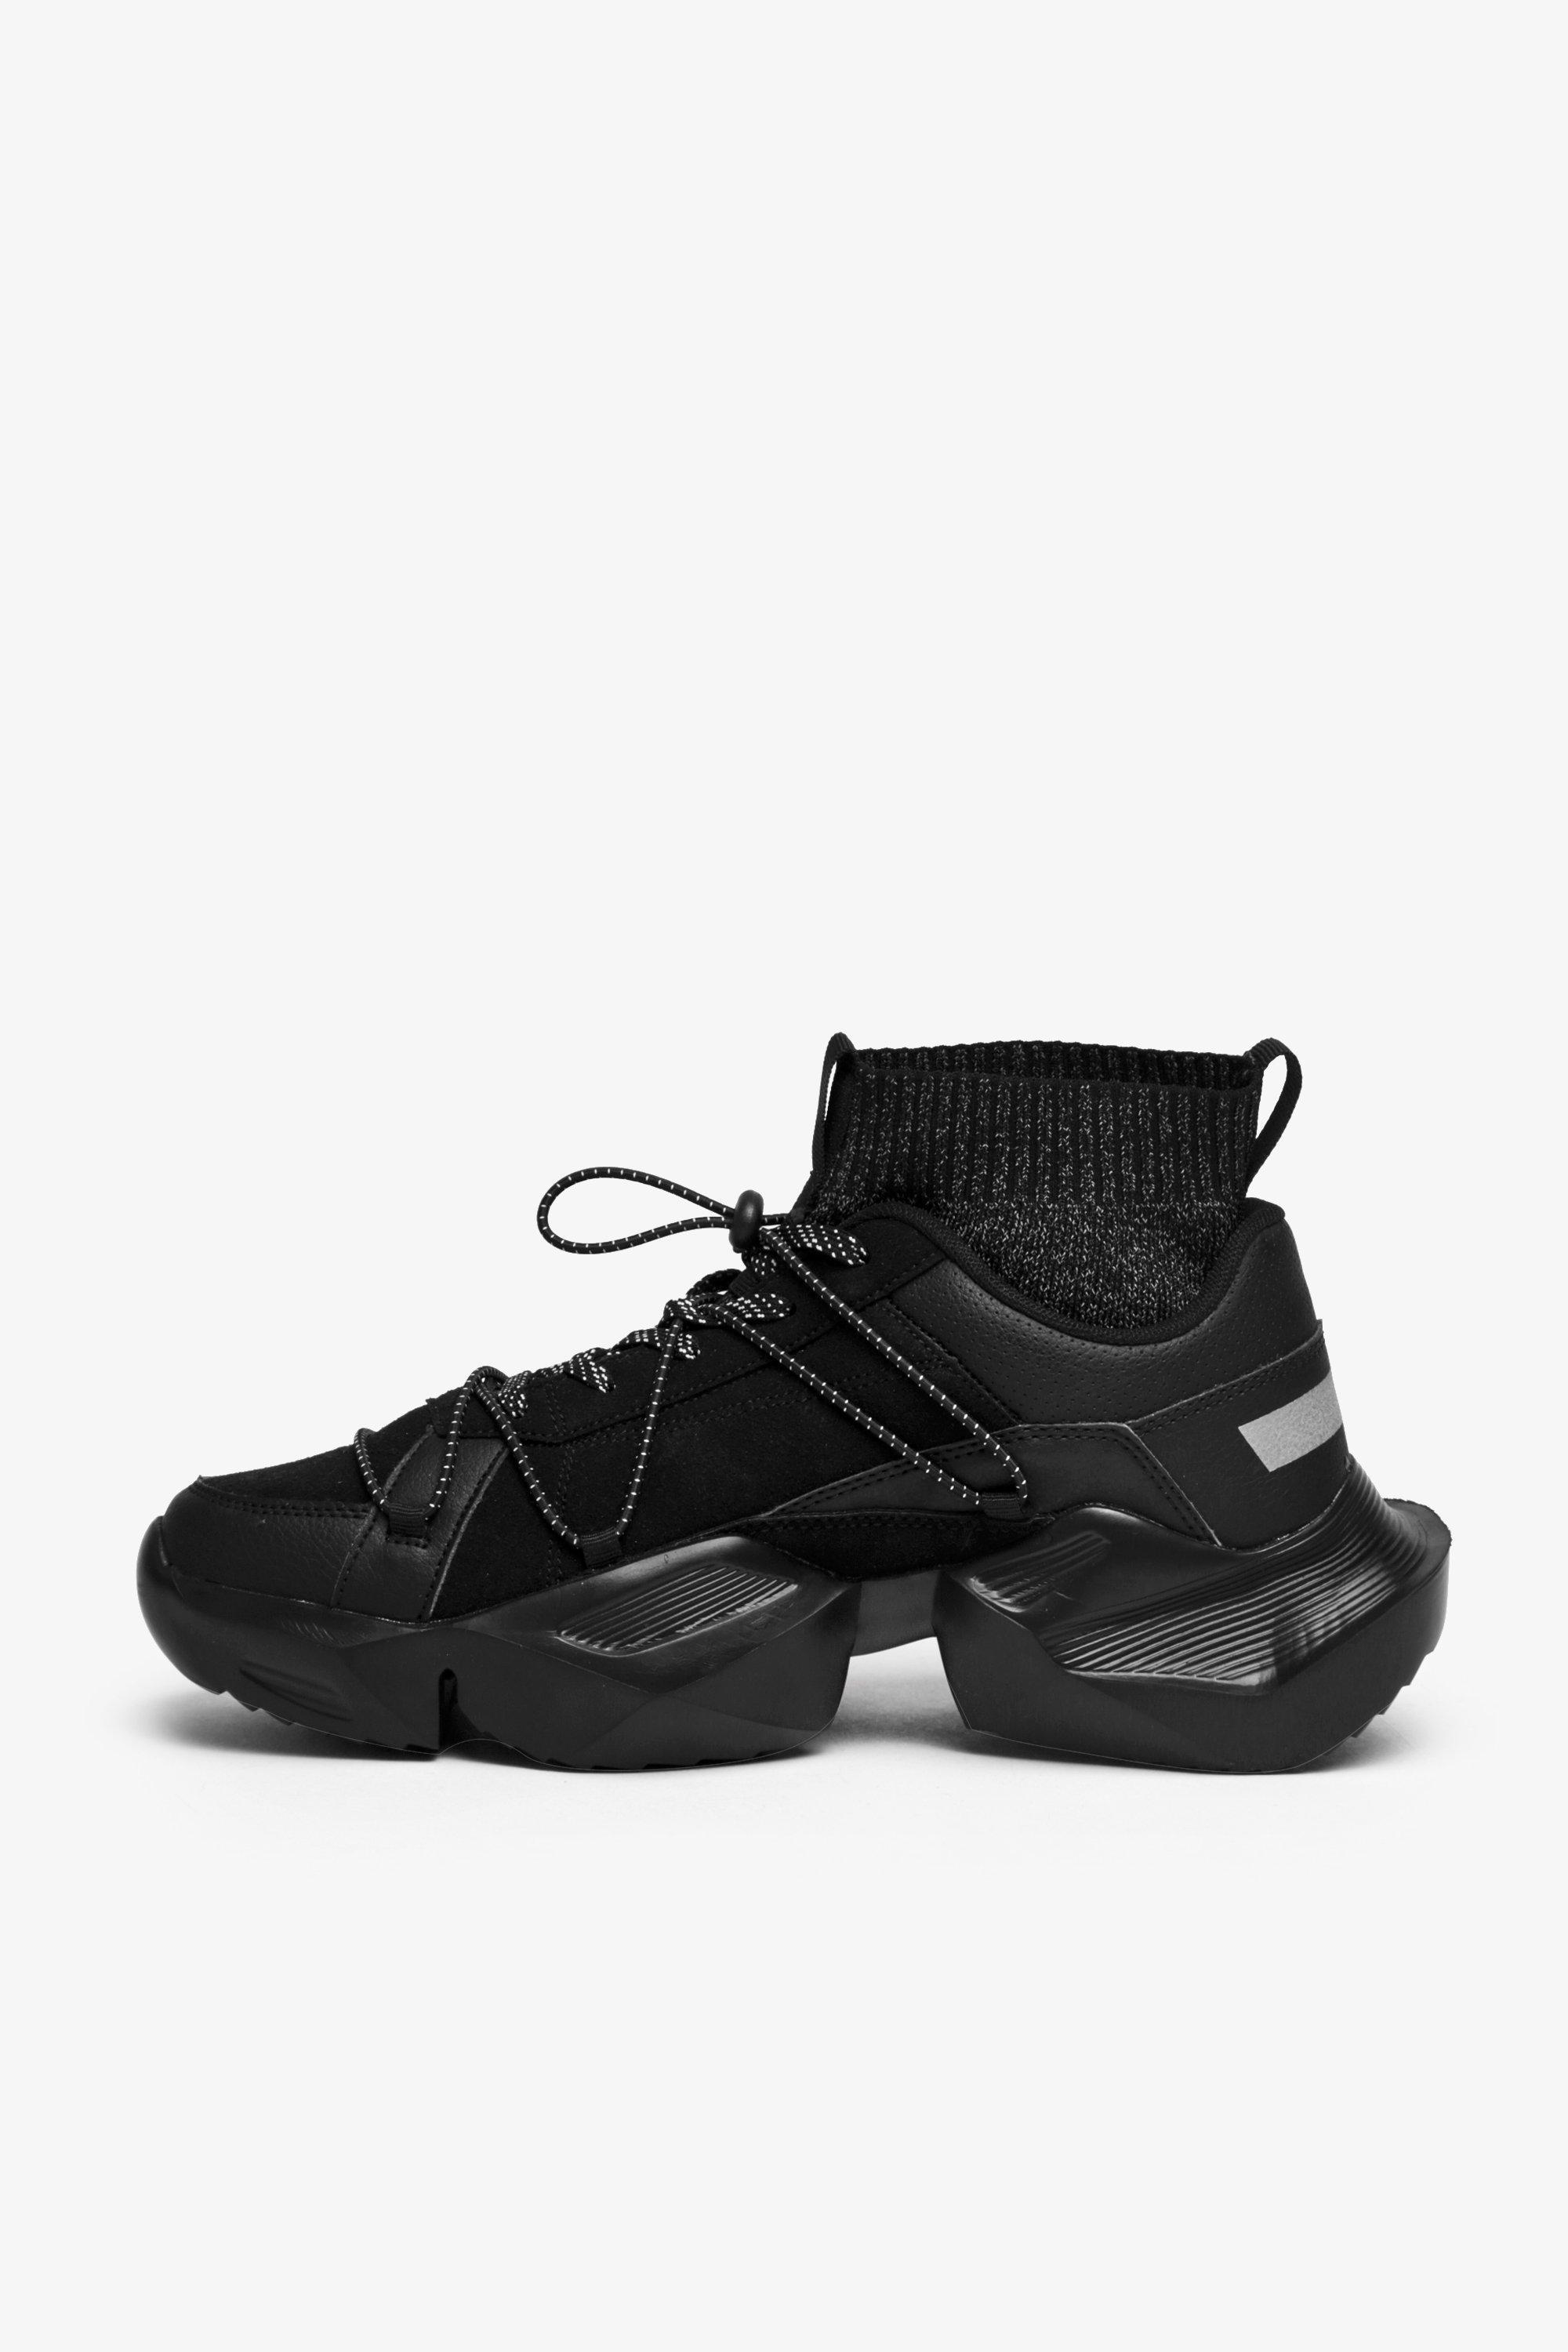 BoohooMAN Denim Man Chunky Sneaker With Reflective Sock Insert in Black for  Men - Lyst